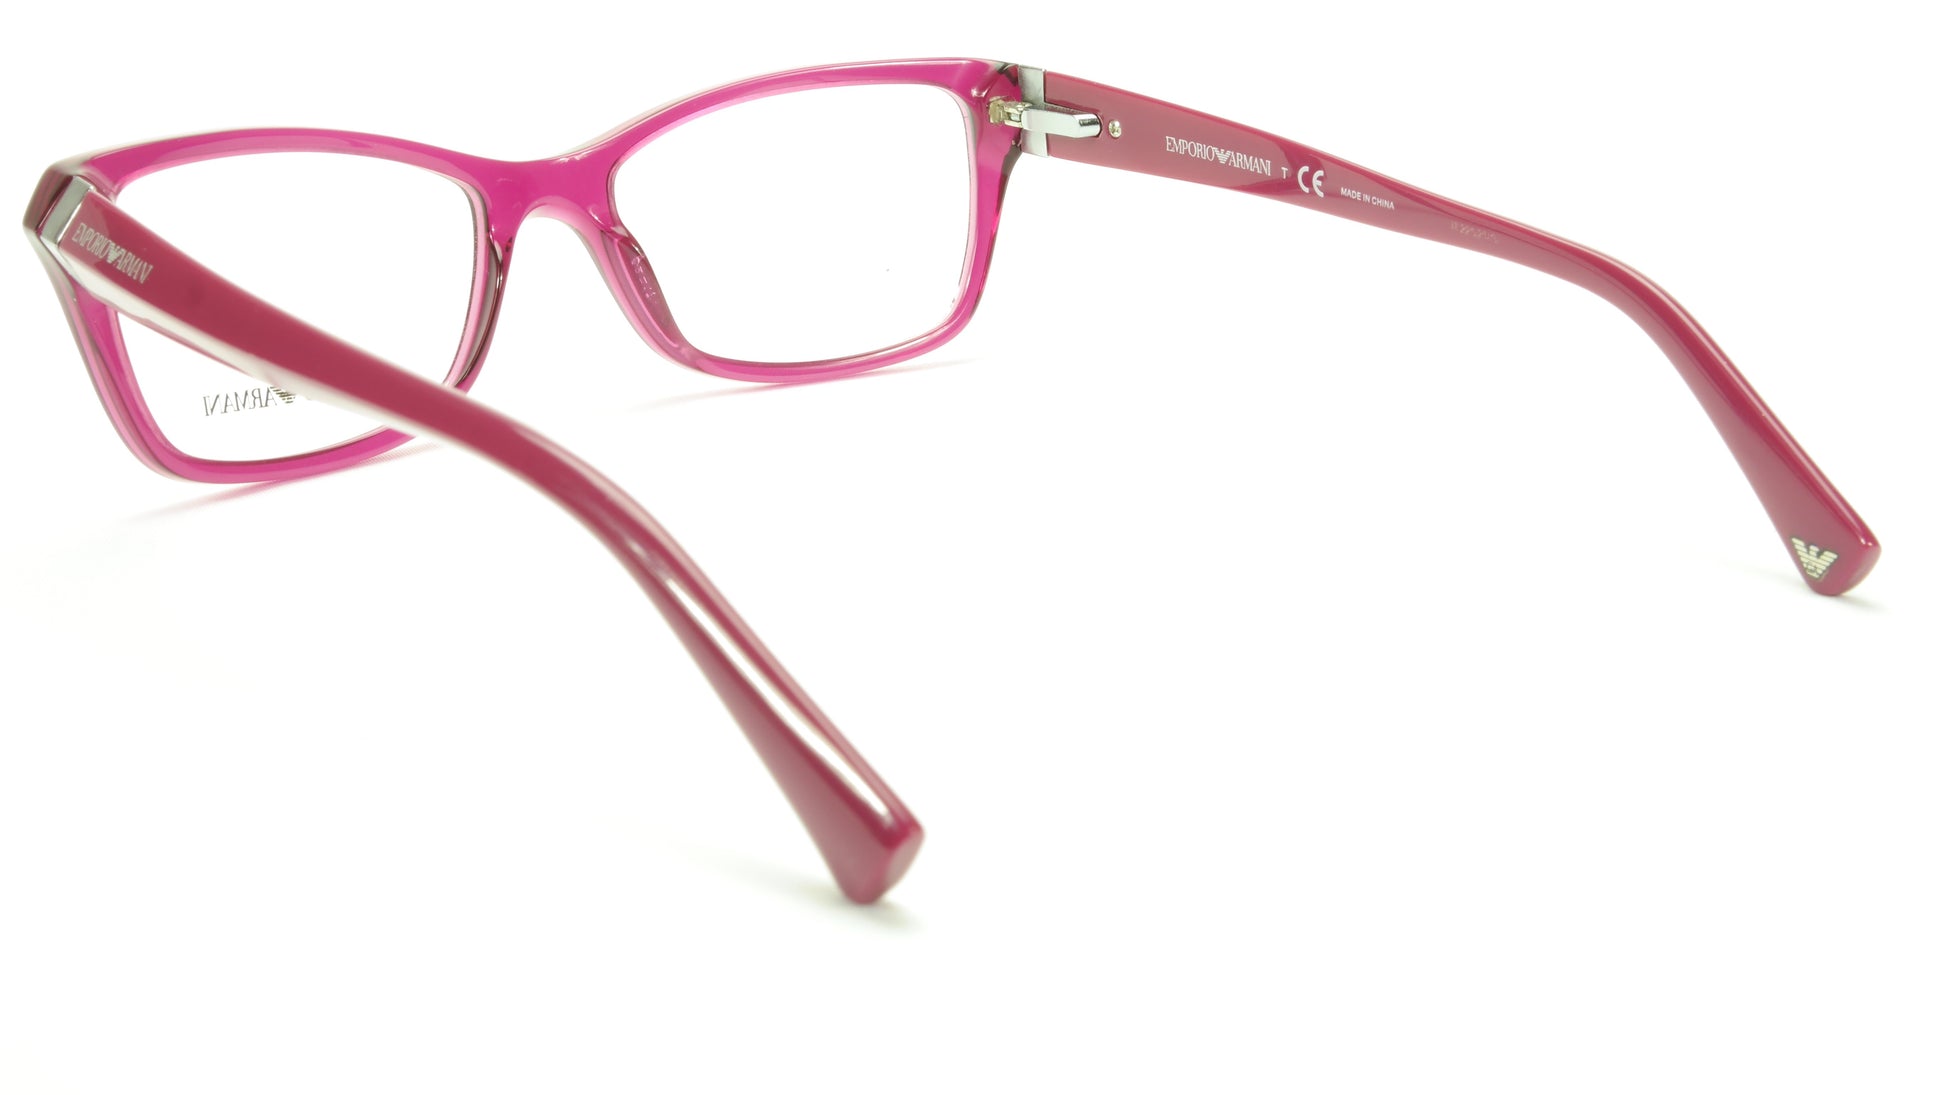 Emporio Armani EA3023 5199 Eyeglasses Frame Acetate Violet - Frame Bay